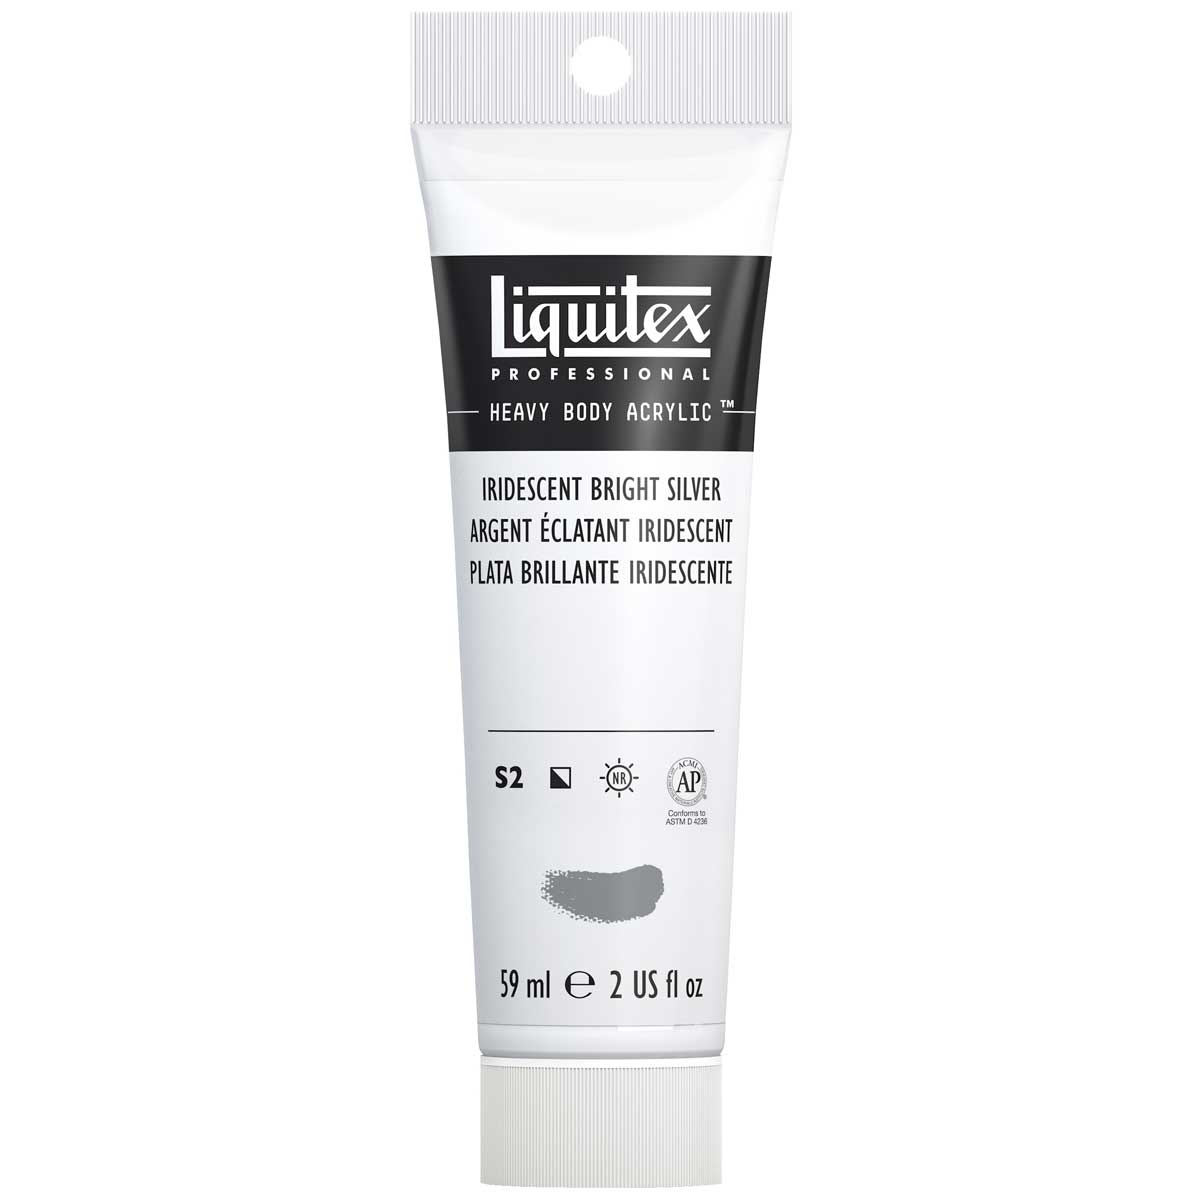 Liquitex Heavy Body Acrylic - Iridescent Bright Silver 59ml/2oz